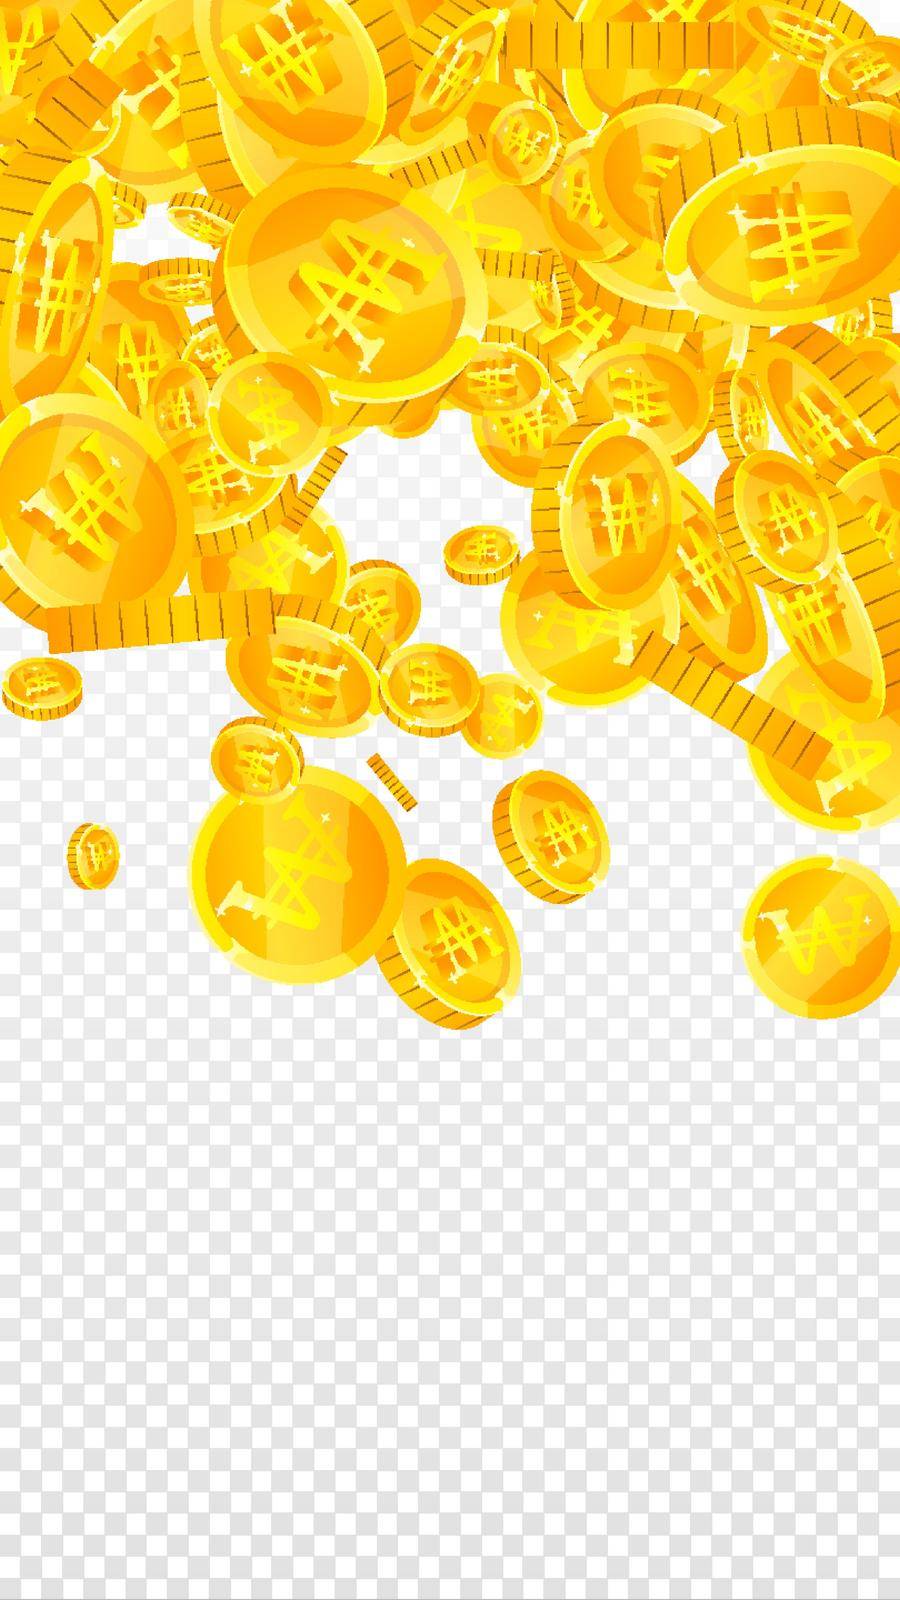 Korean won coins falling. Scattered gold WON coins. Korea money. Global financial crisis concept. Vector illustration.